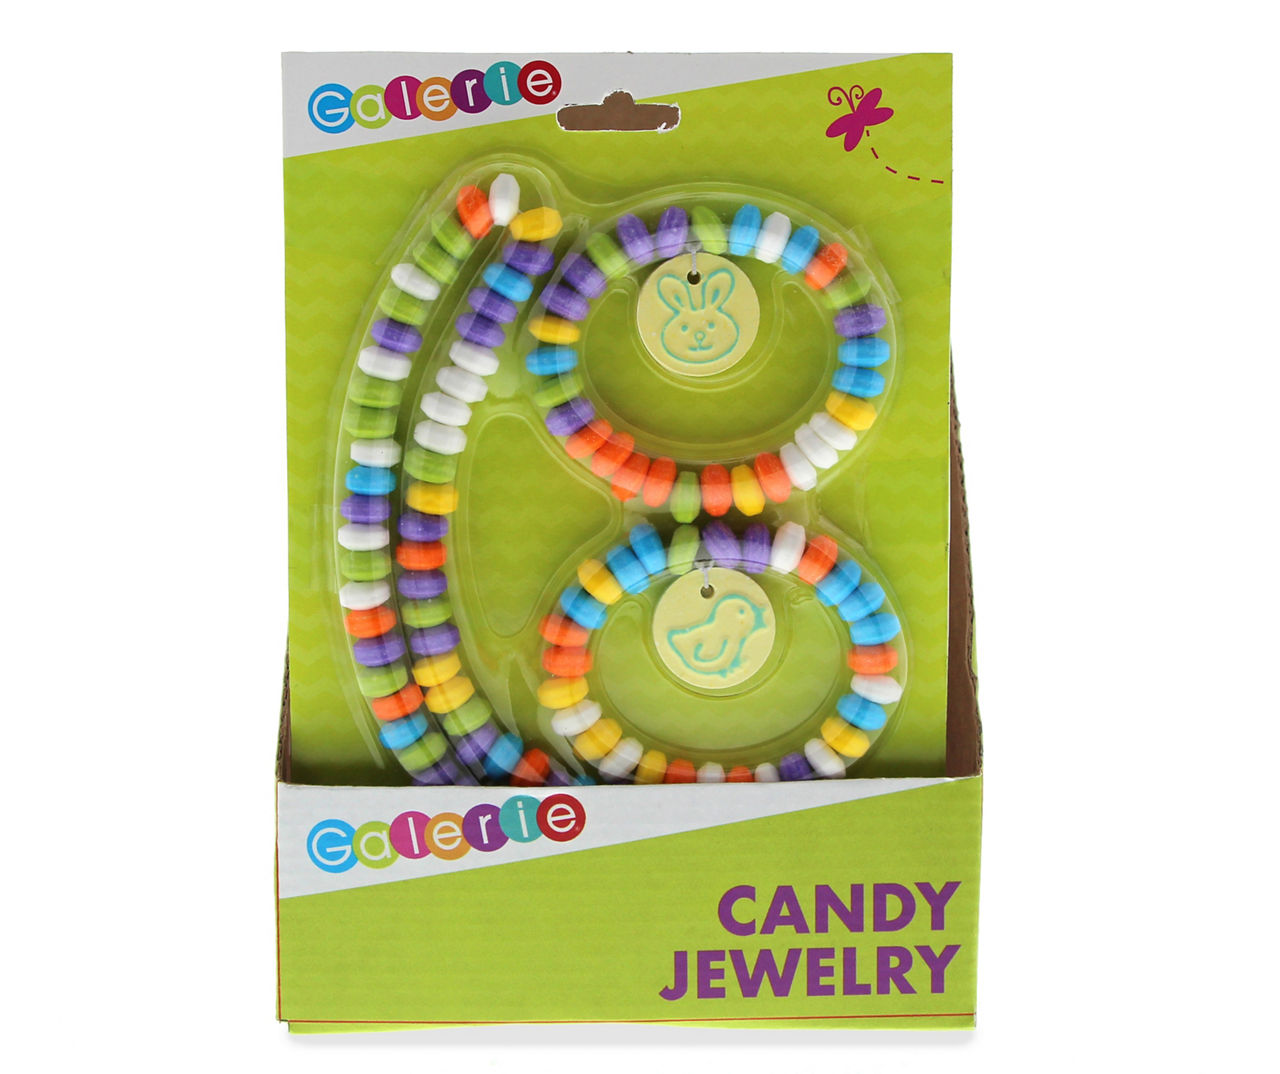 Galerie Candy Jewelry, 1.74 Oz.